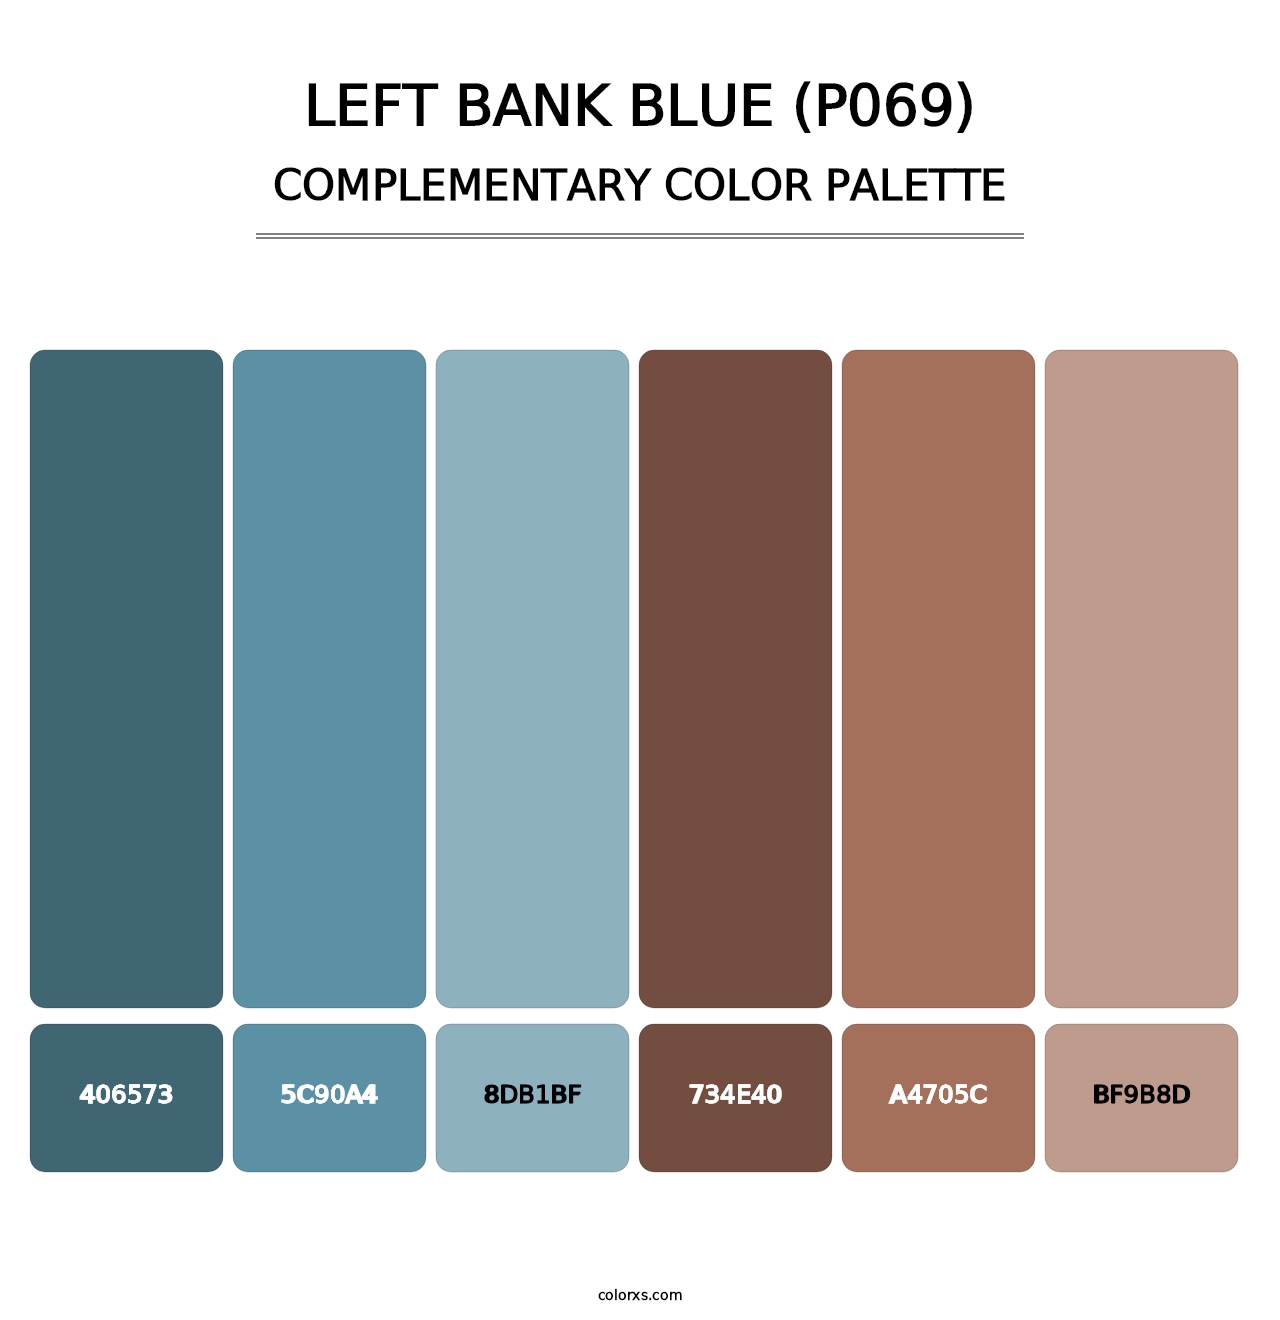 Left Bank Blue (P069) - Complementary Color Palette